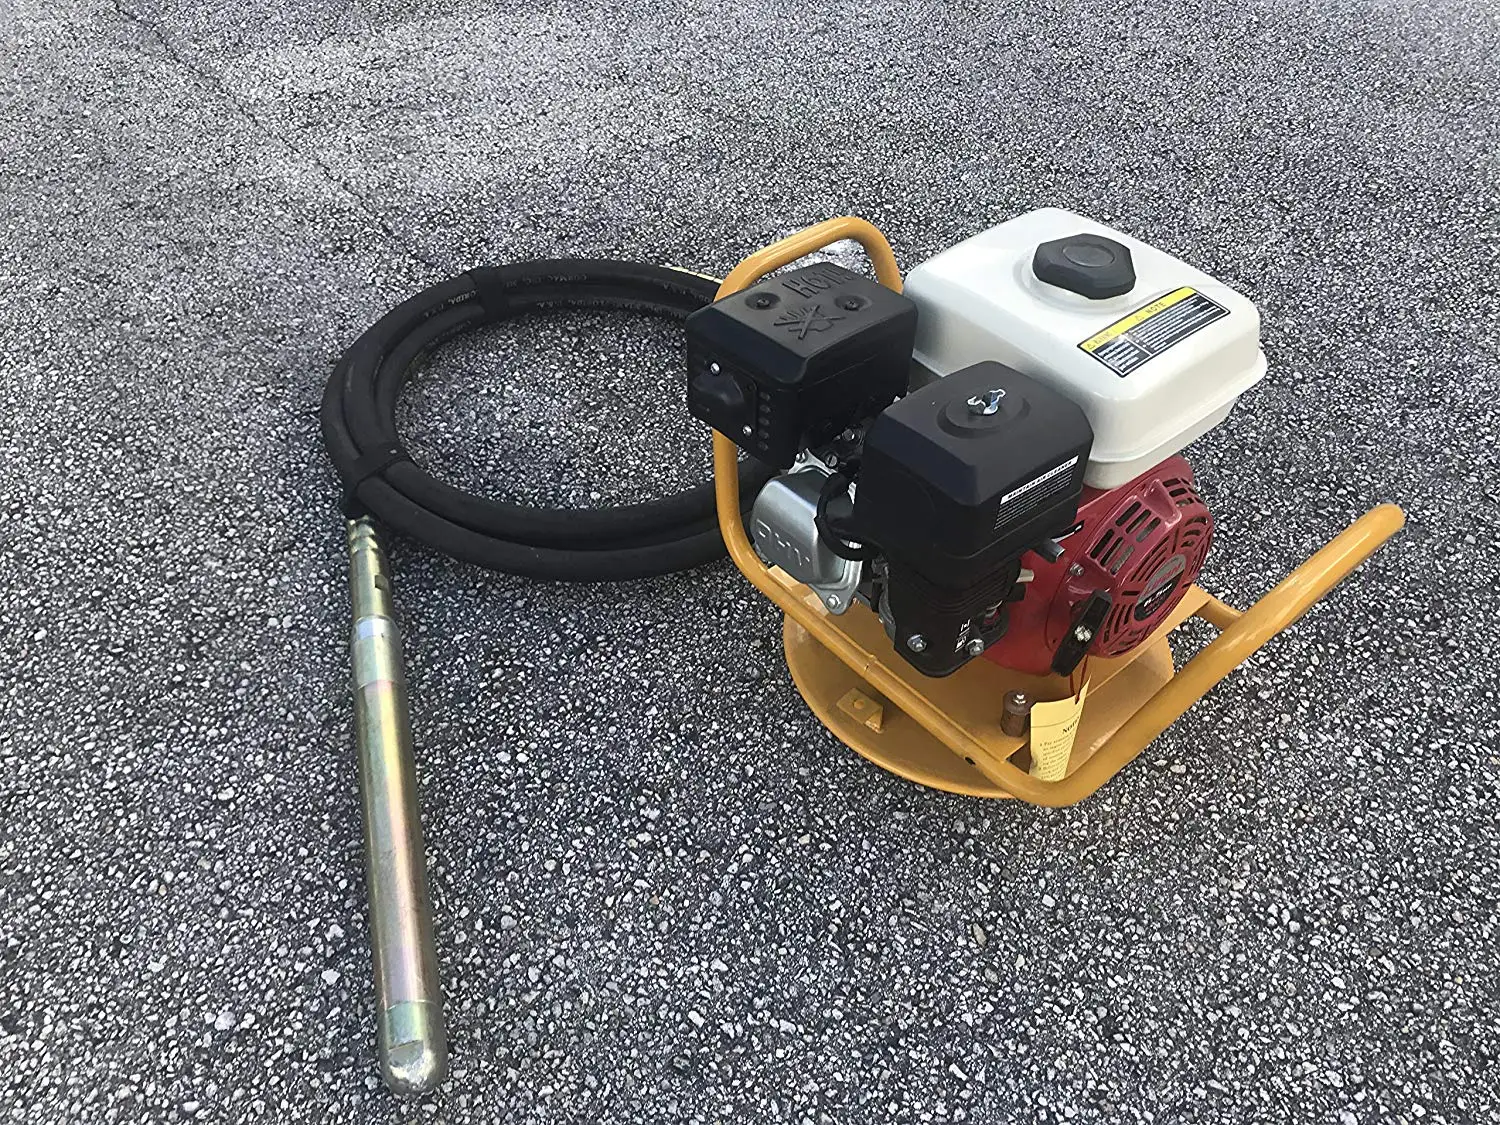 Concrete vibrator gasoline engine hose motor with frame and coupling